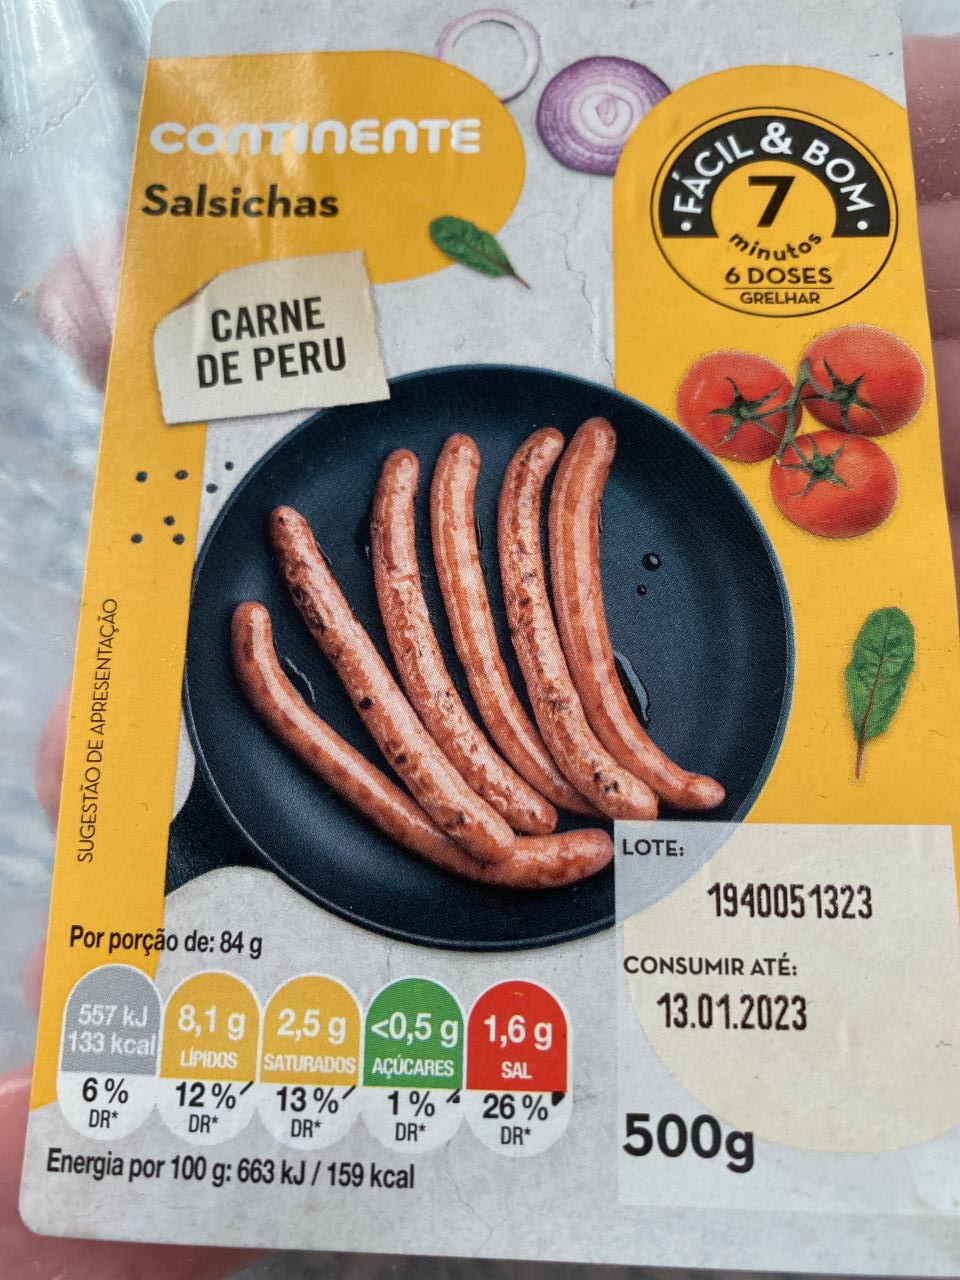 Фото - Сосиски индюшиные Salsichas carne de peru Fácil&Bom